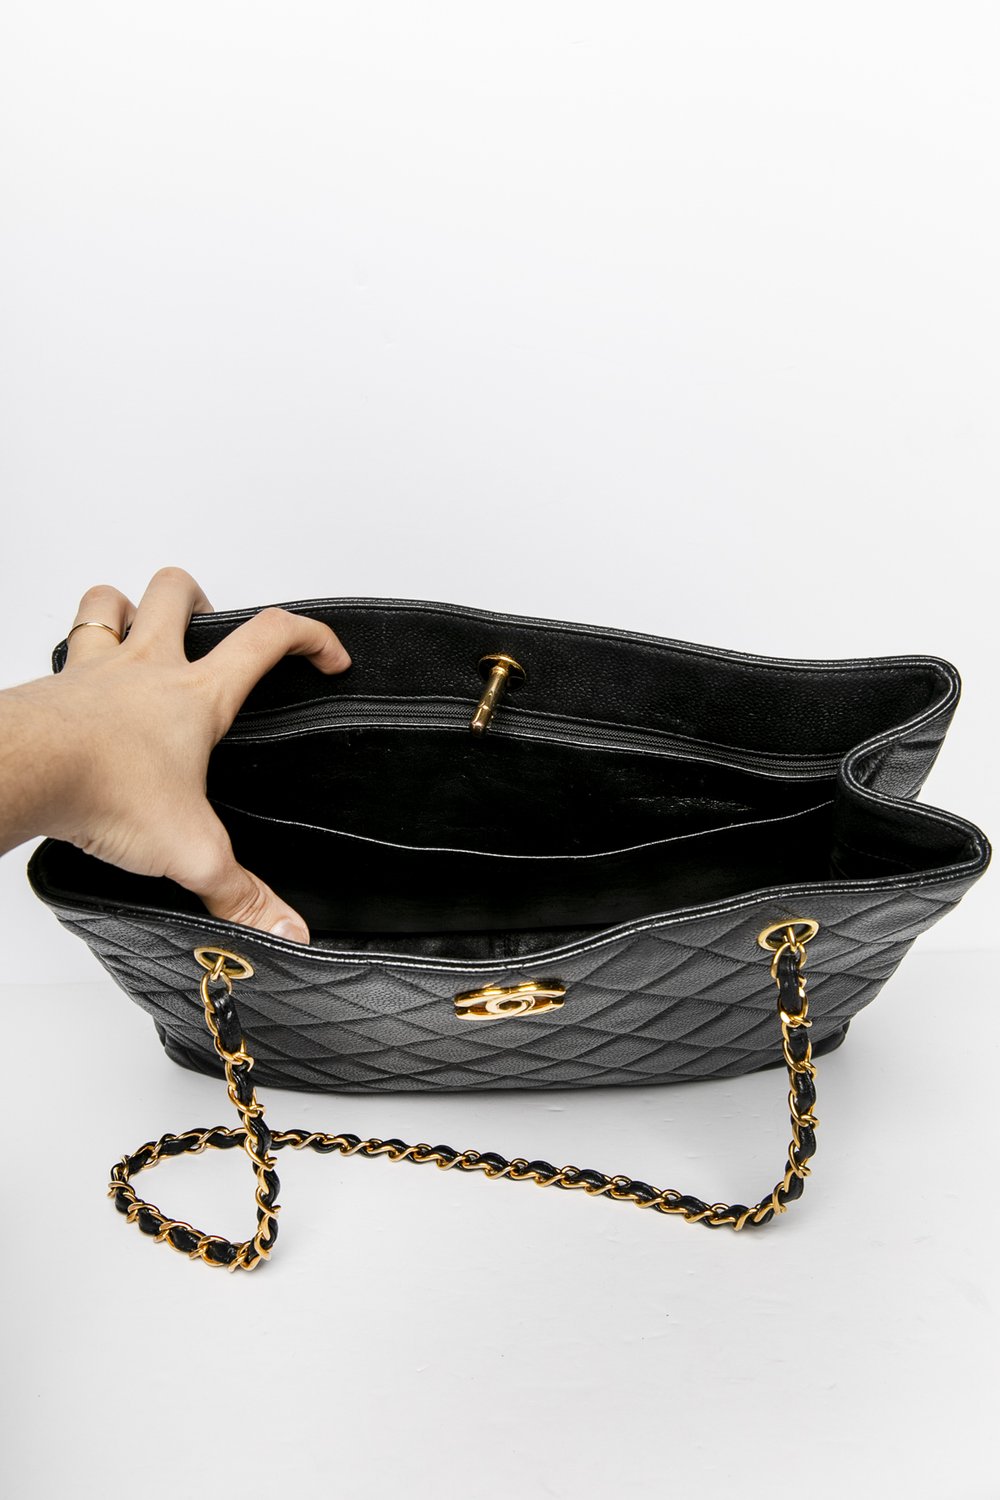 Chanel Vintage 1991 Black Caviar Leather CC Tote Bag – I MISS YOU VINTAGE